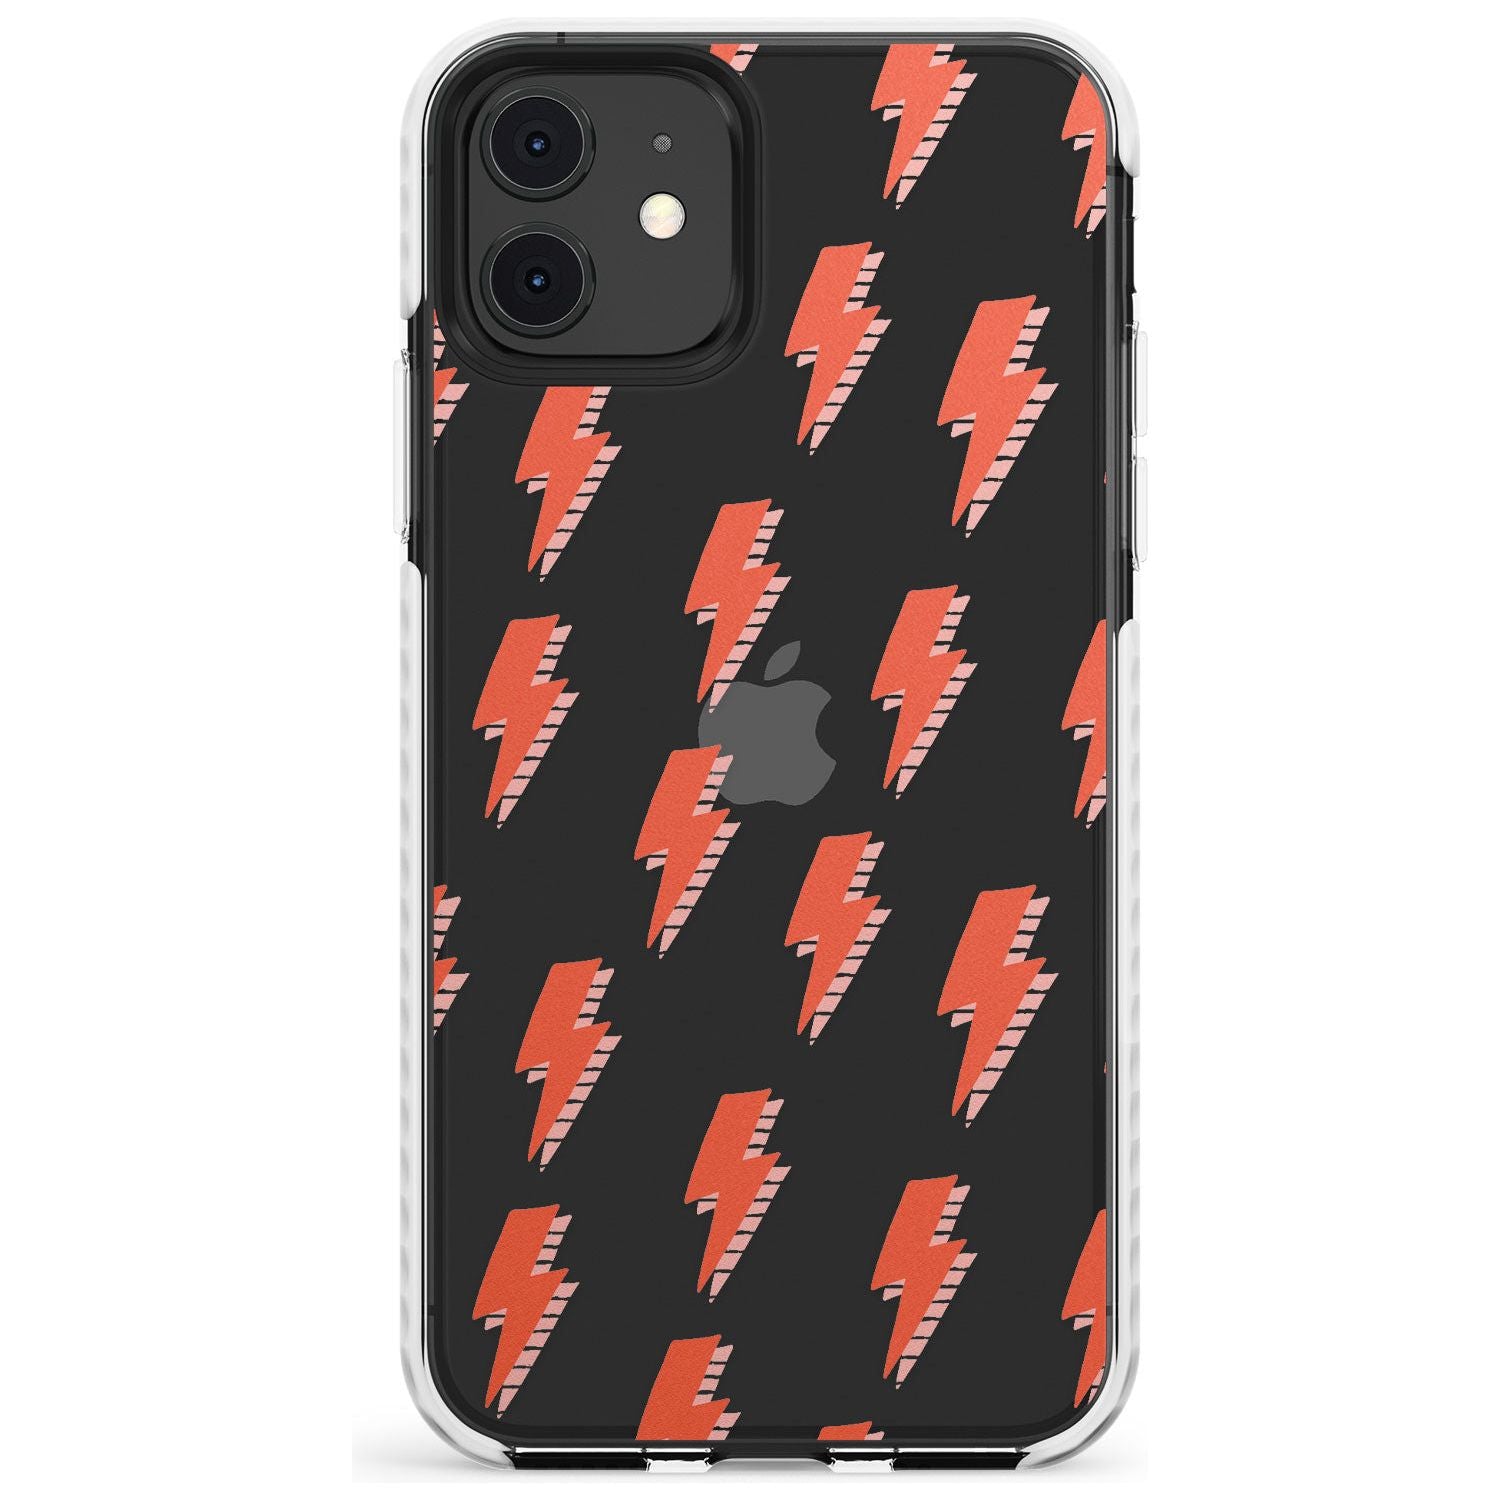 Pop Lightning Slim TPU Phone Case for iPhone 11